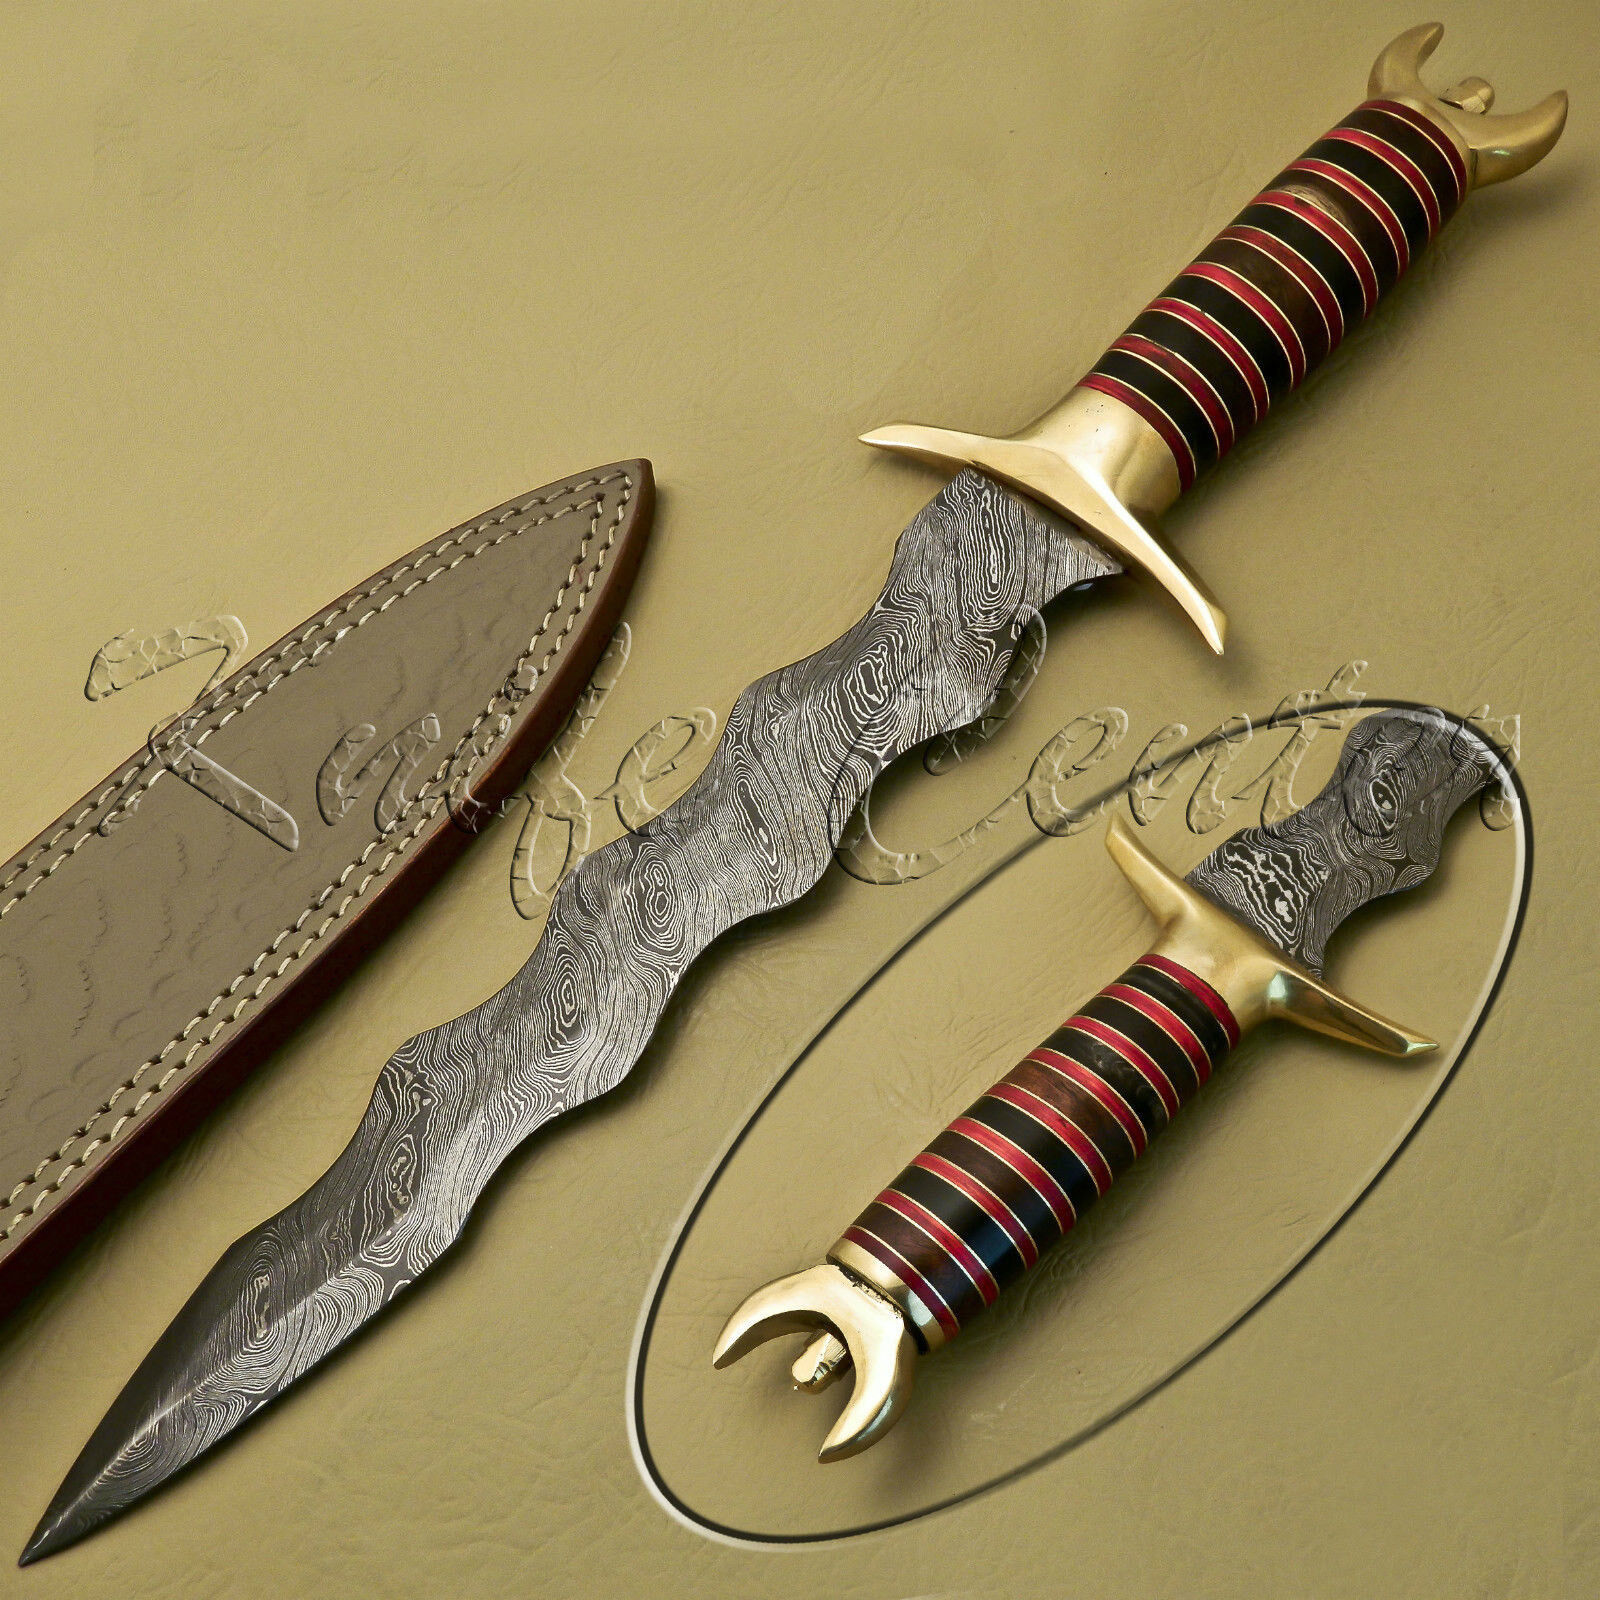 BEAUTIFUL CUSTOM HAND MADE DAMASCUS STEEL HUNTING KNIFE / WAVY DAGGER KNIFE